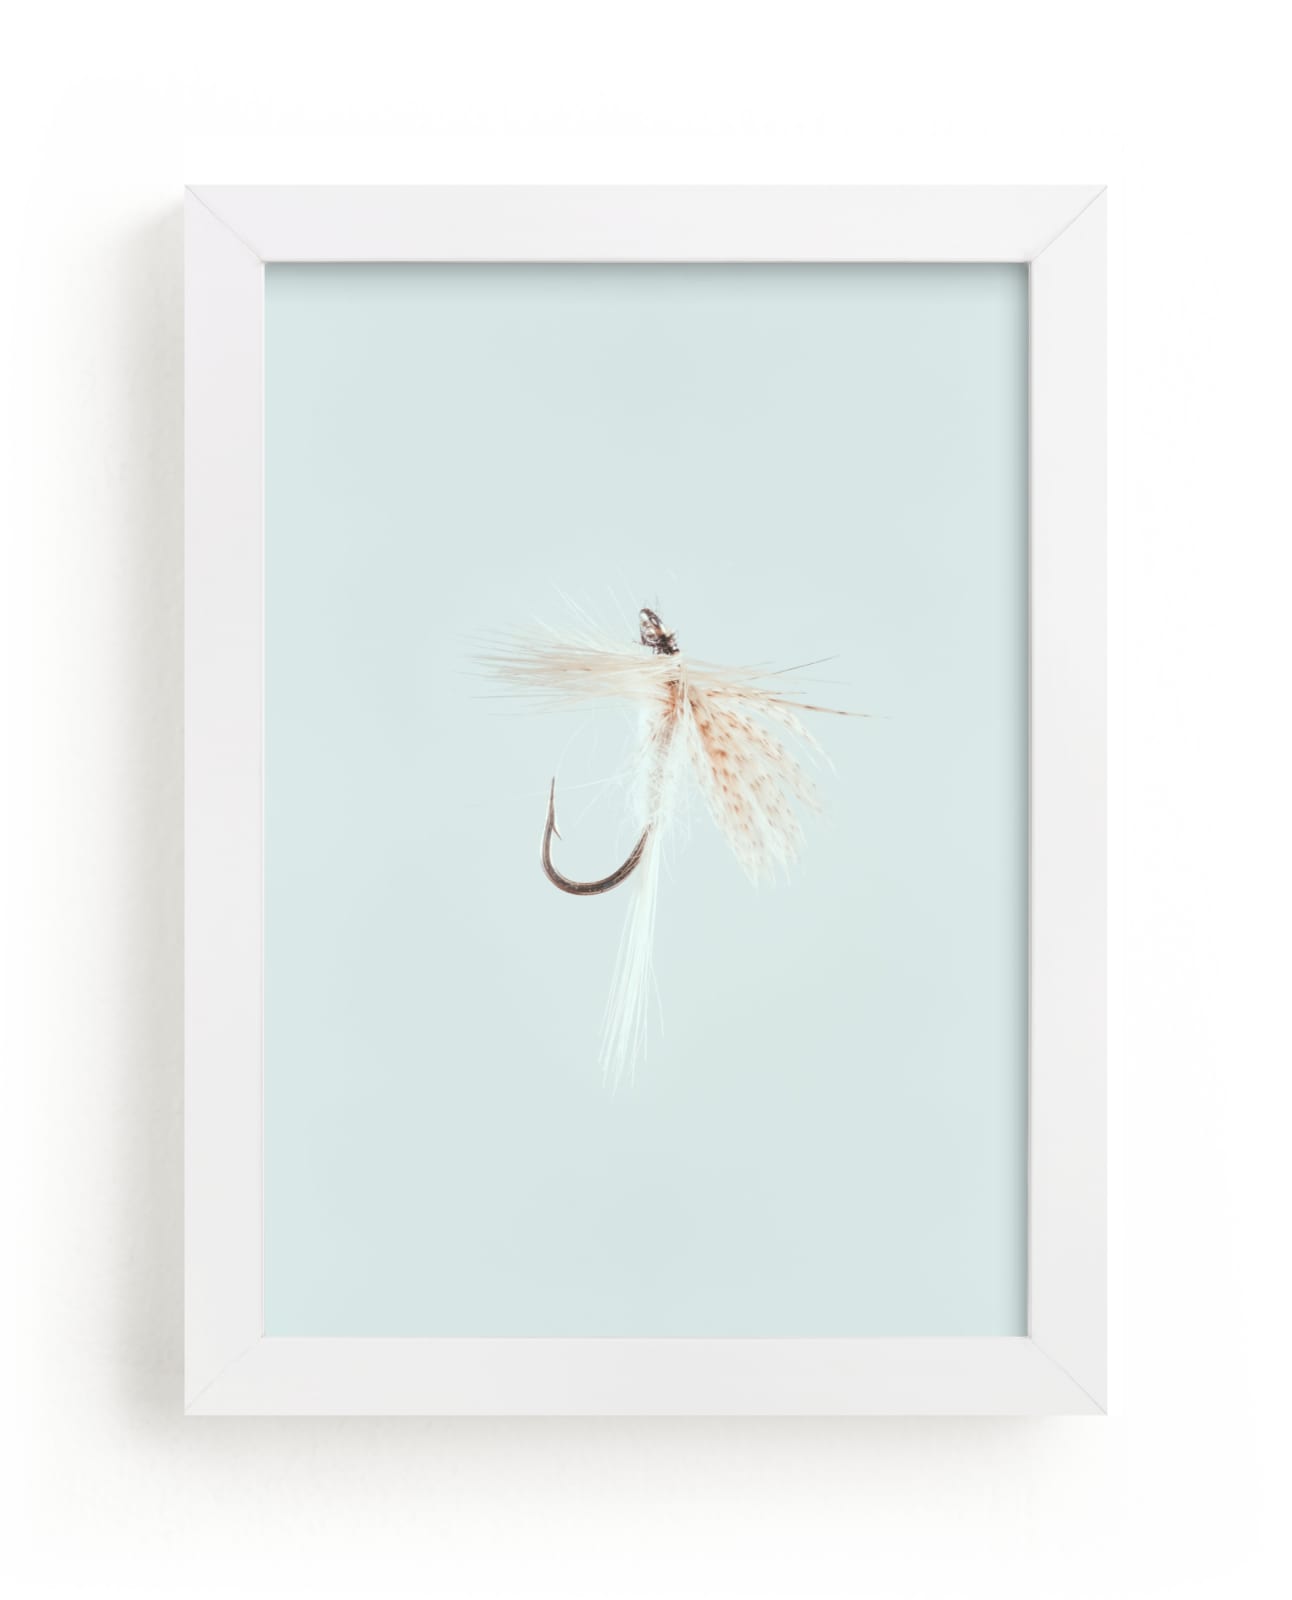 Hackle Fishing Flies. Fine art print.